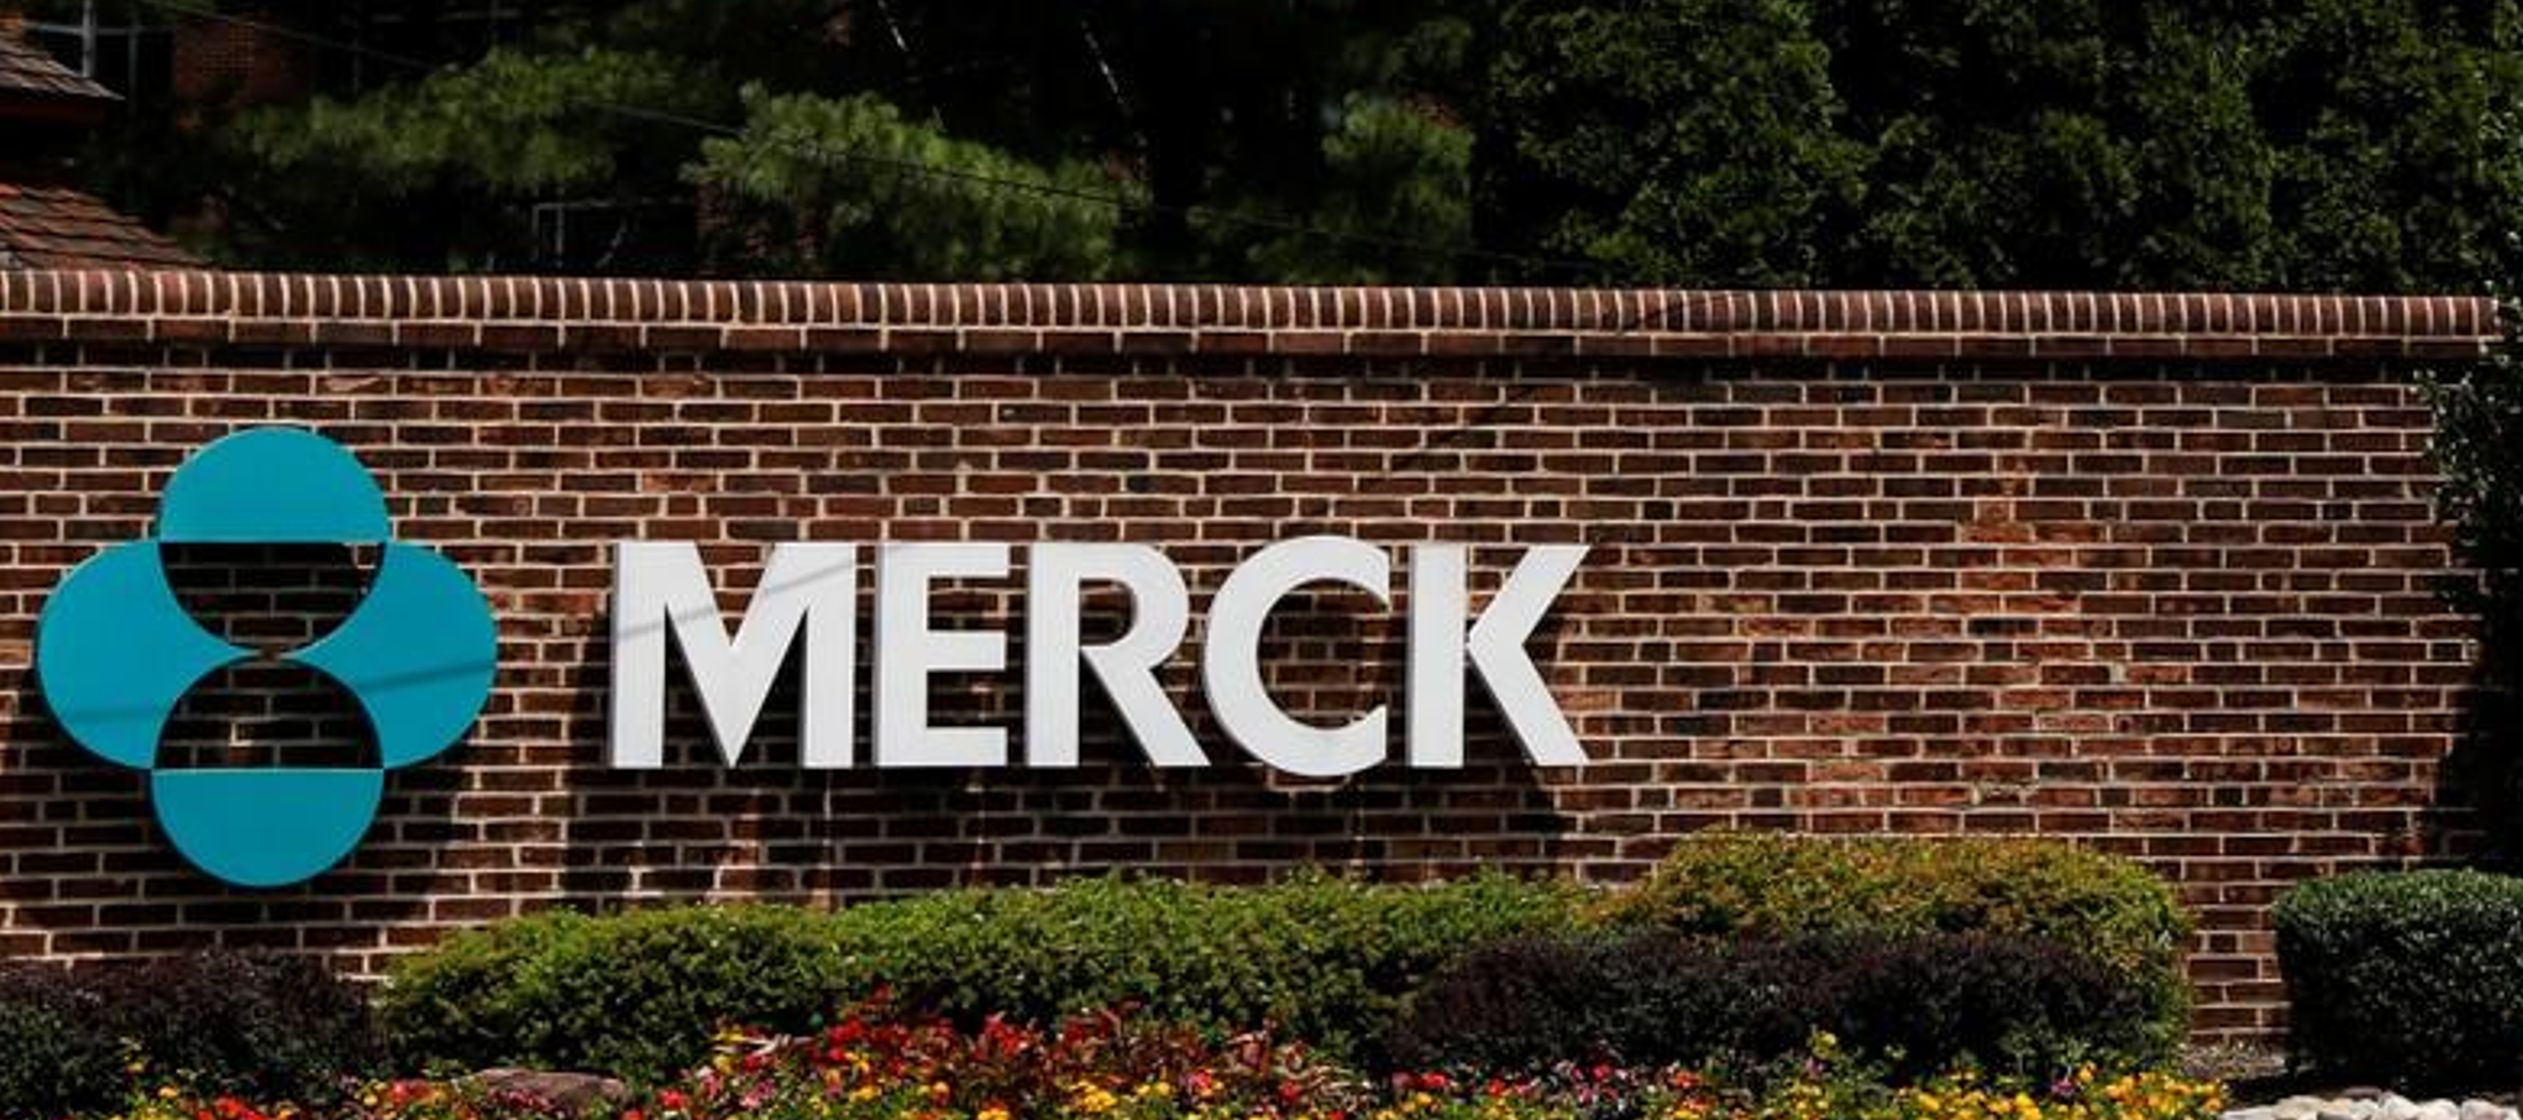 El logot de Merck en una entrada al campus de Merck & Co en Linden, Nueva Jersey, EU, 12 de...